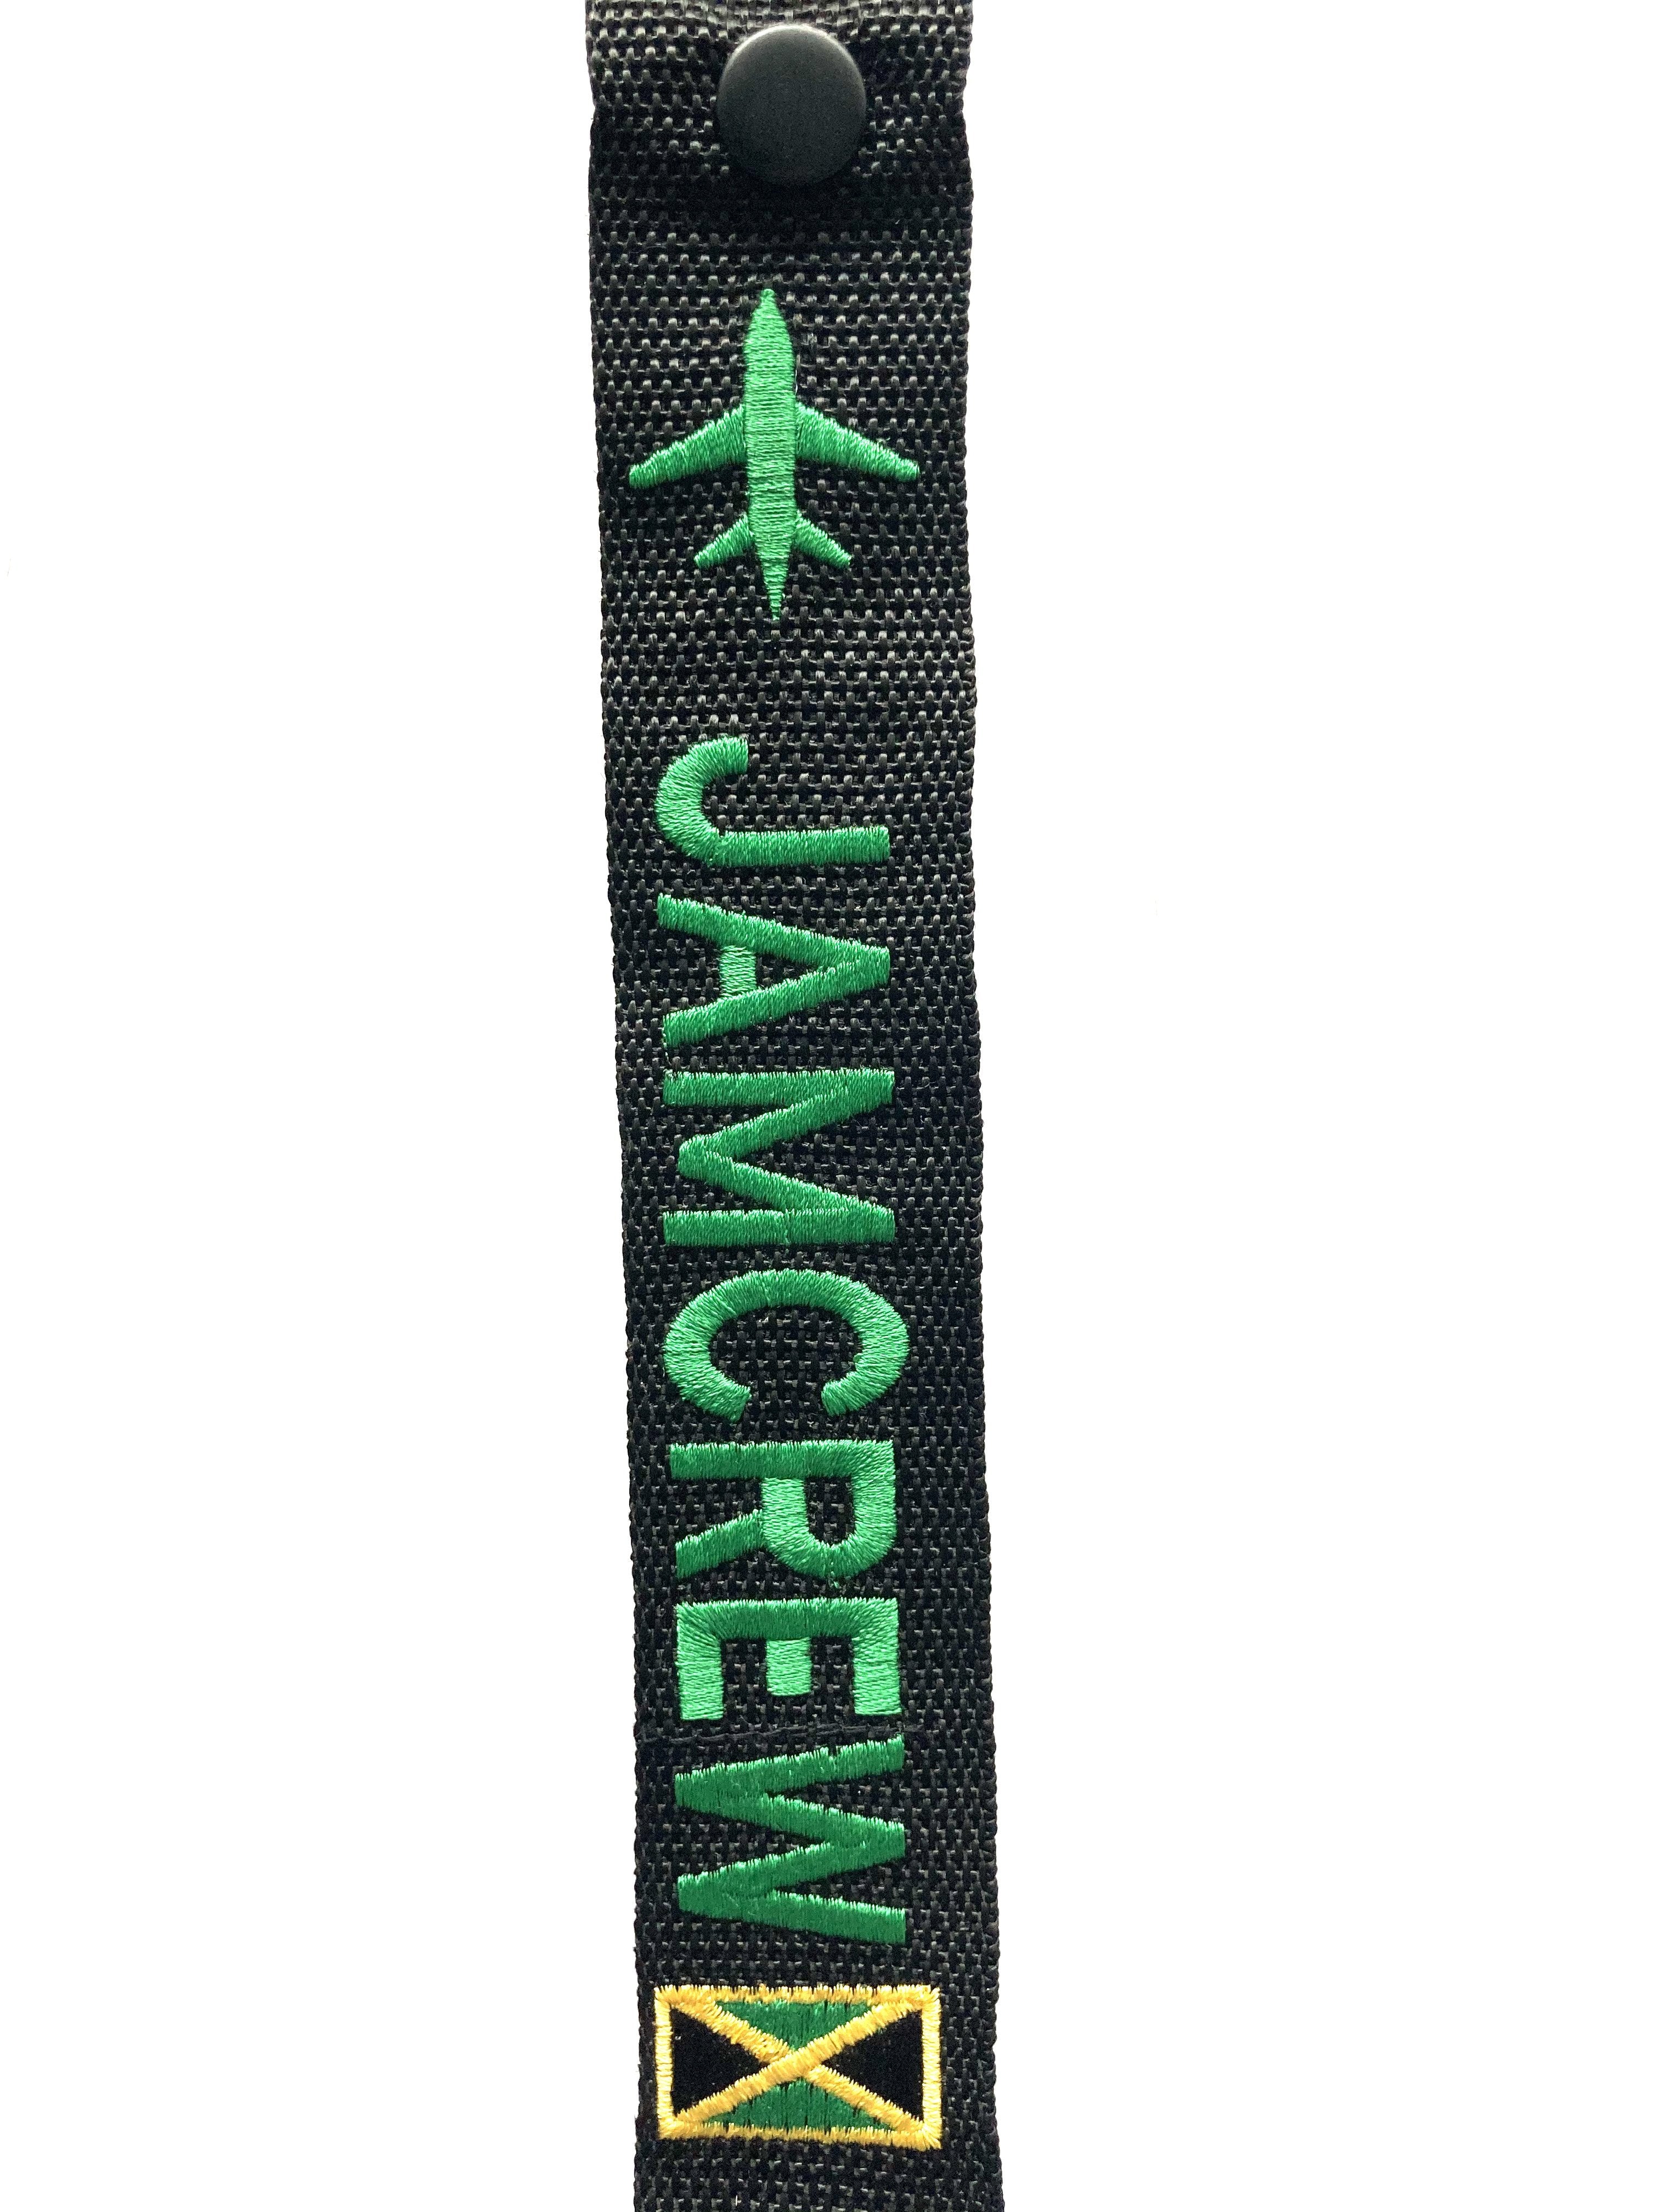 Crew & Flags - JAMCREW Crew Luggage Tag